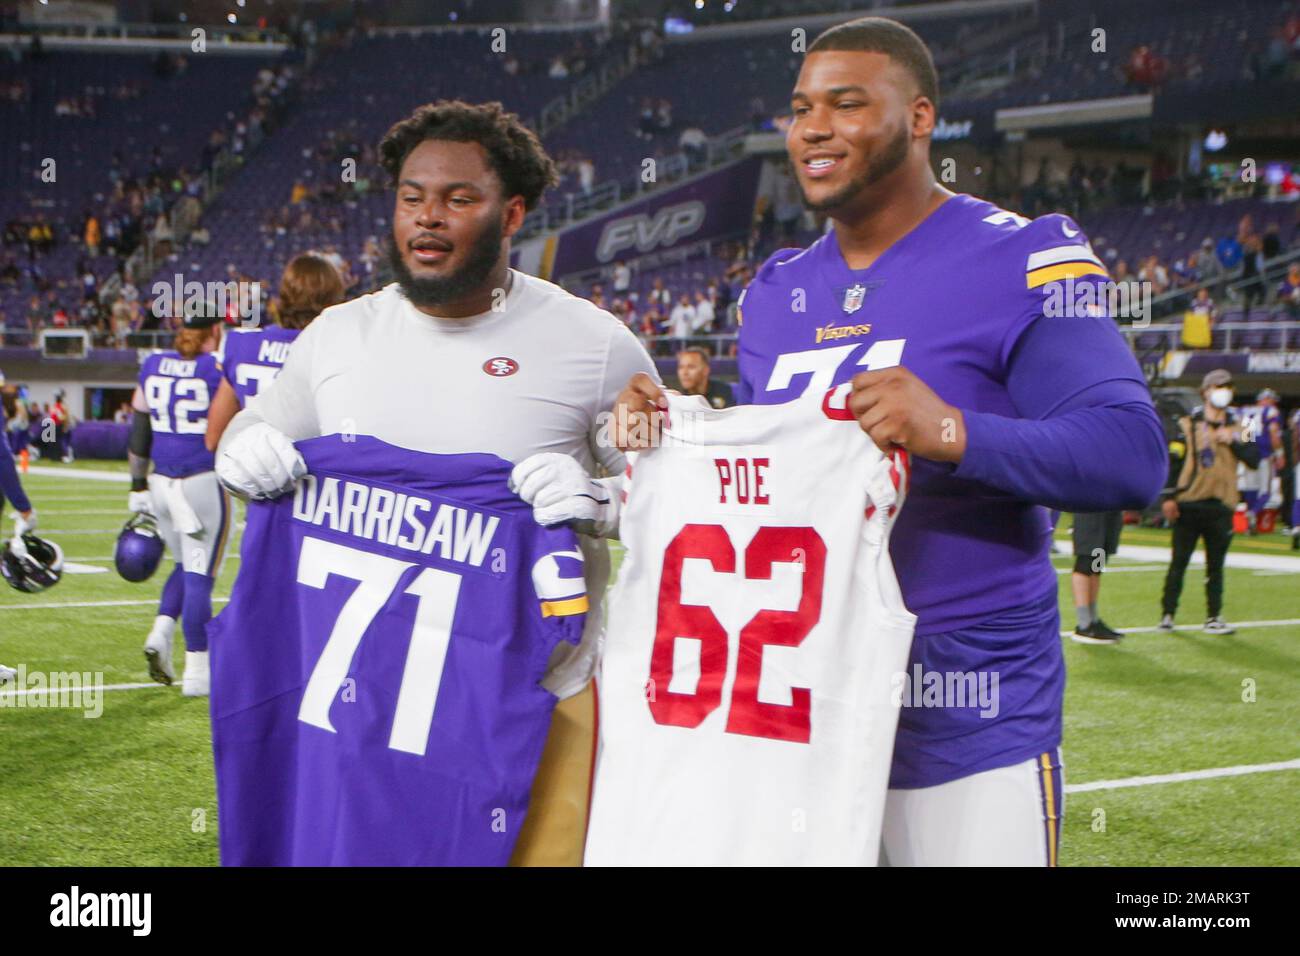 San Francisco 49ers center Jason Poe, left, and Minnesota Vikings